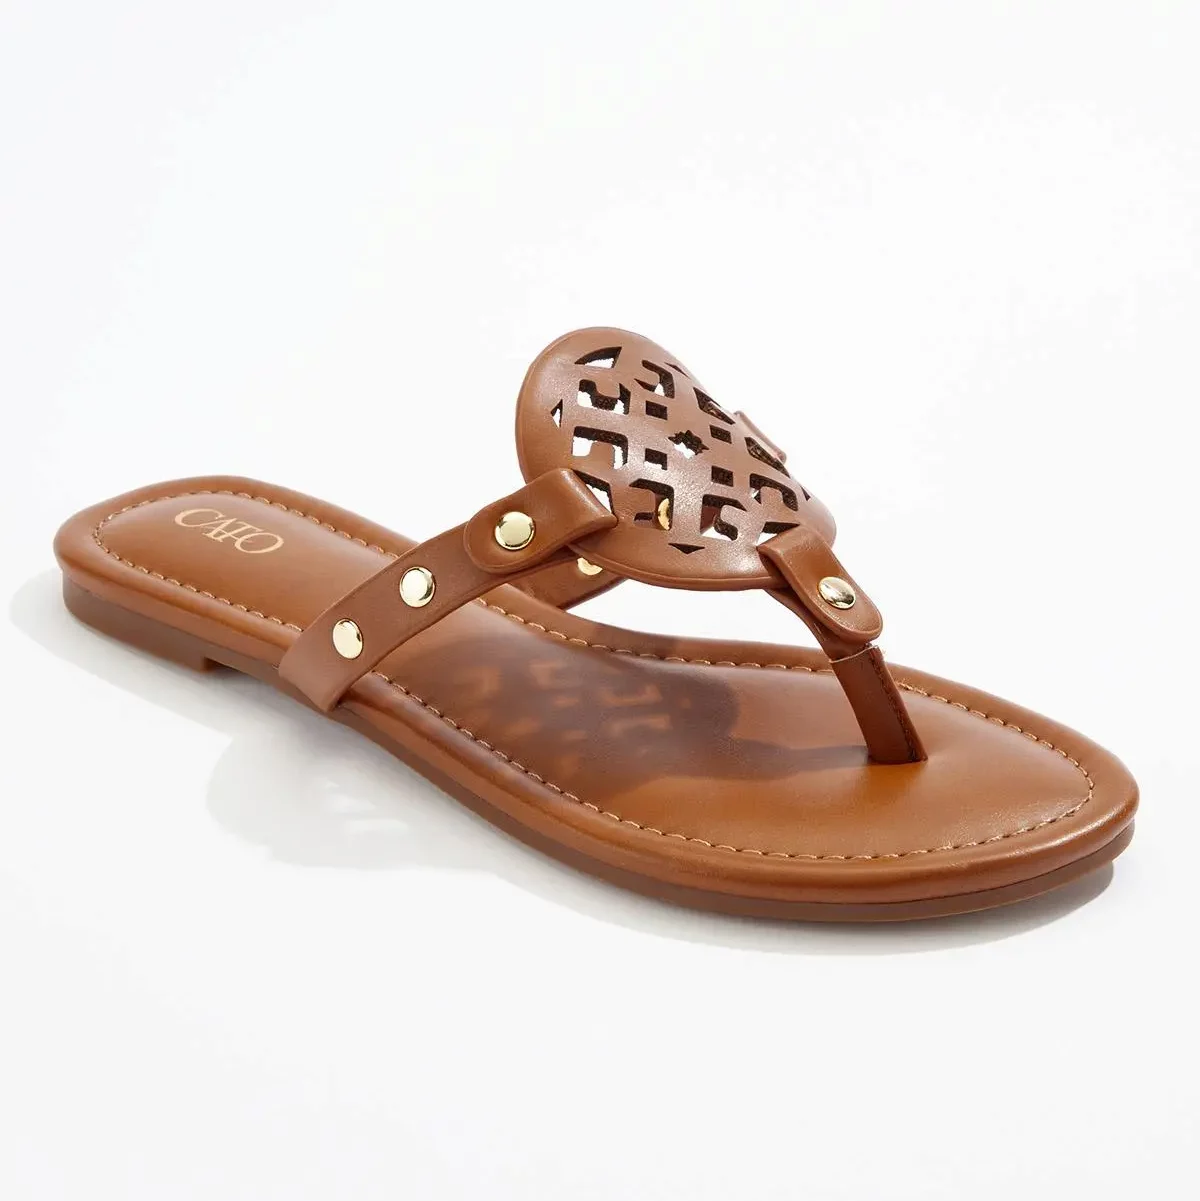 Cato Medallion Thong Sandals